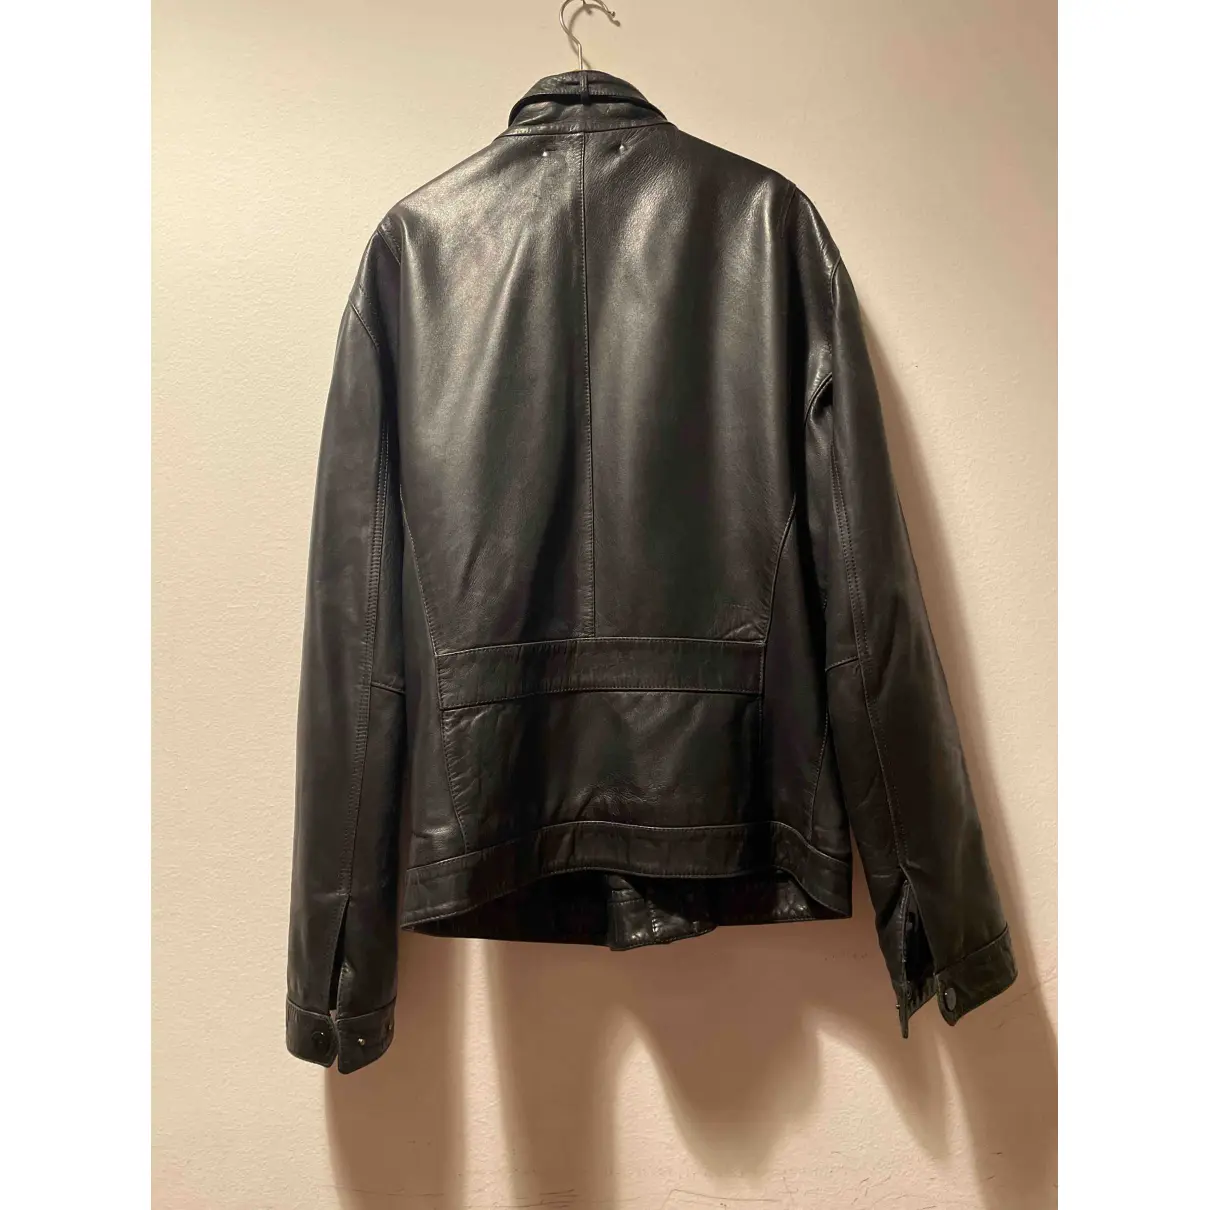 Buy Gianfranco Ferré Leather jacket online